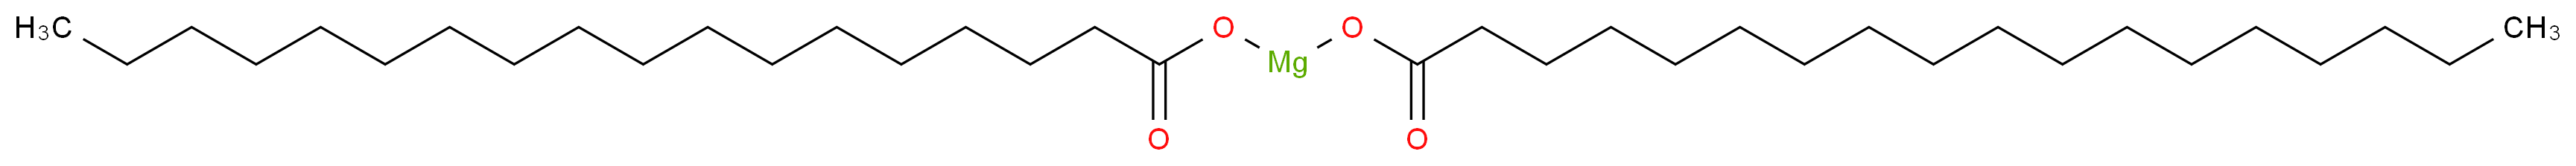 Magnesium stearate_Molecular_structure_CAS_557-04-0)